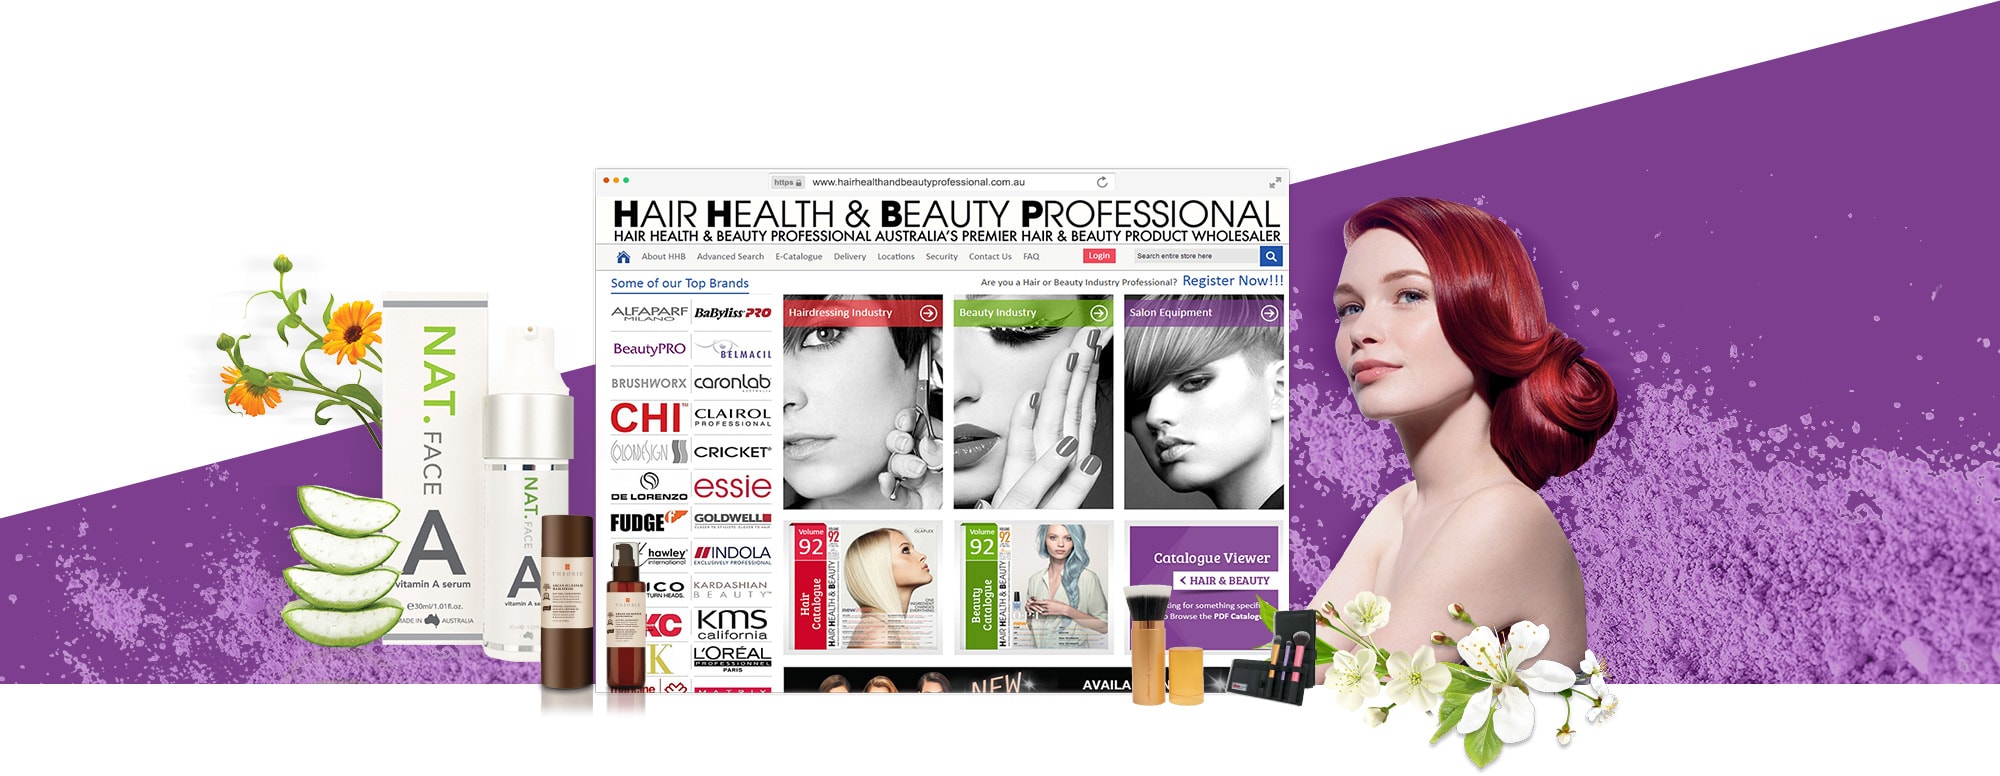 Hair Health & Beauty Professional